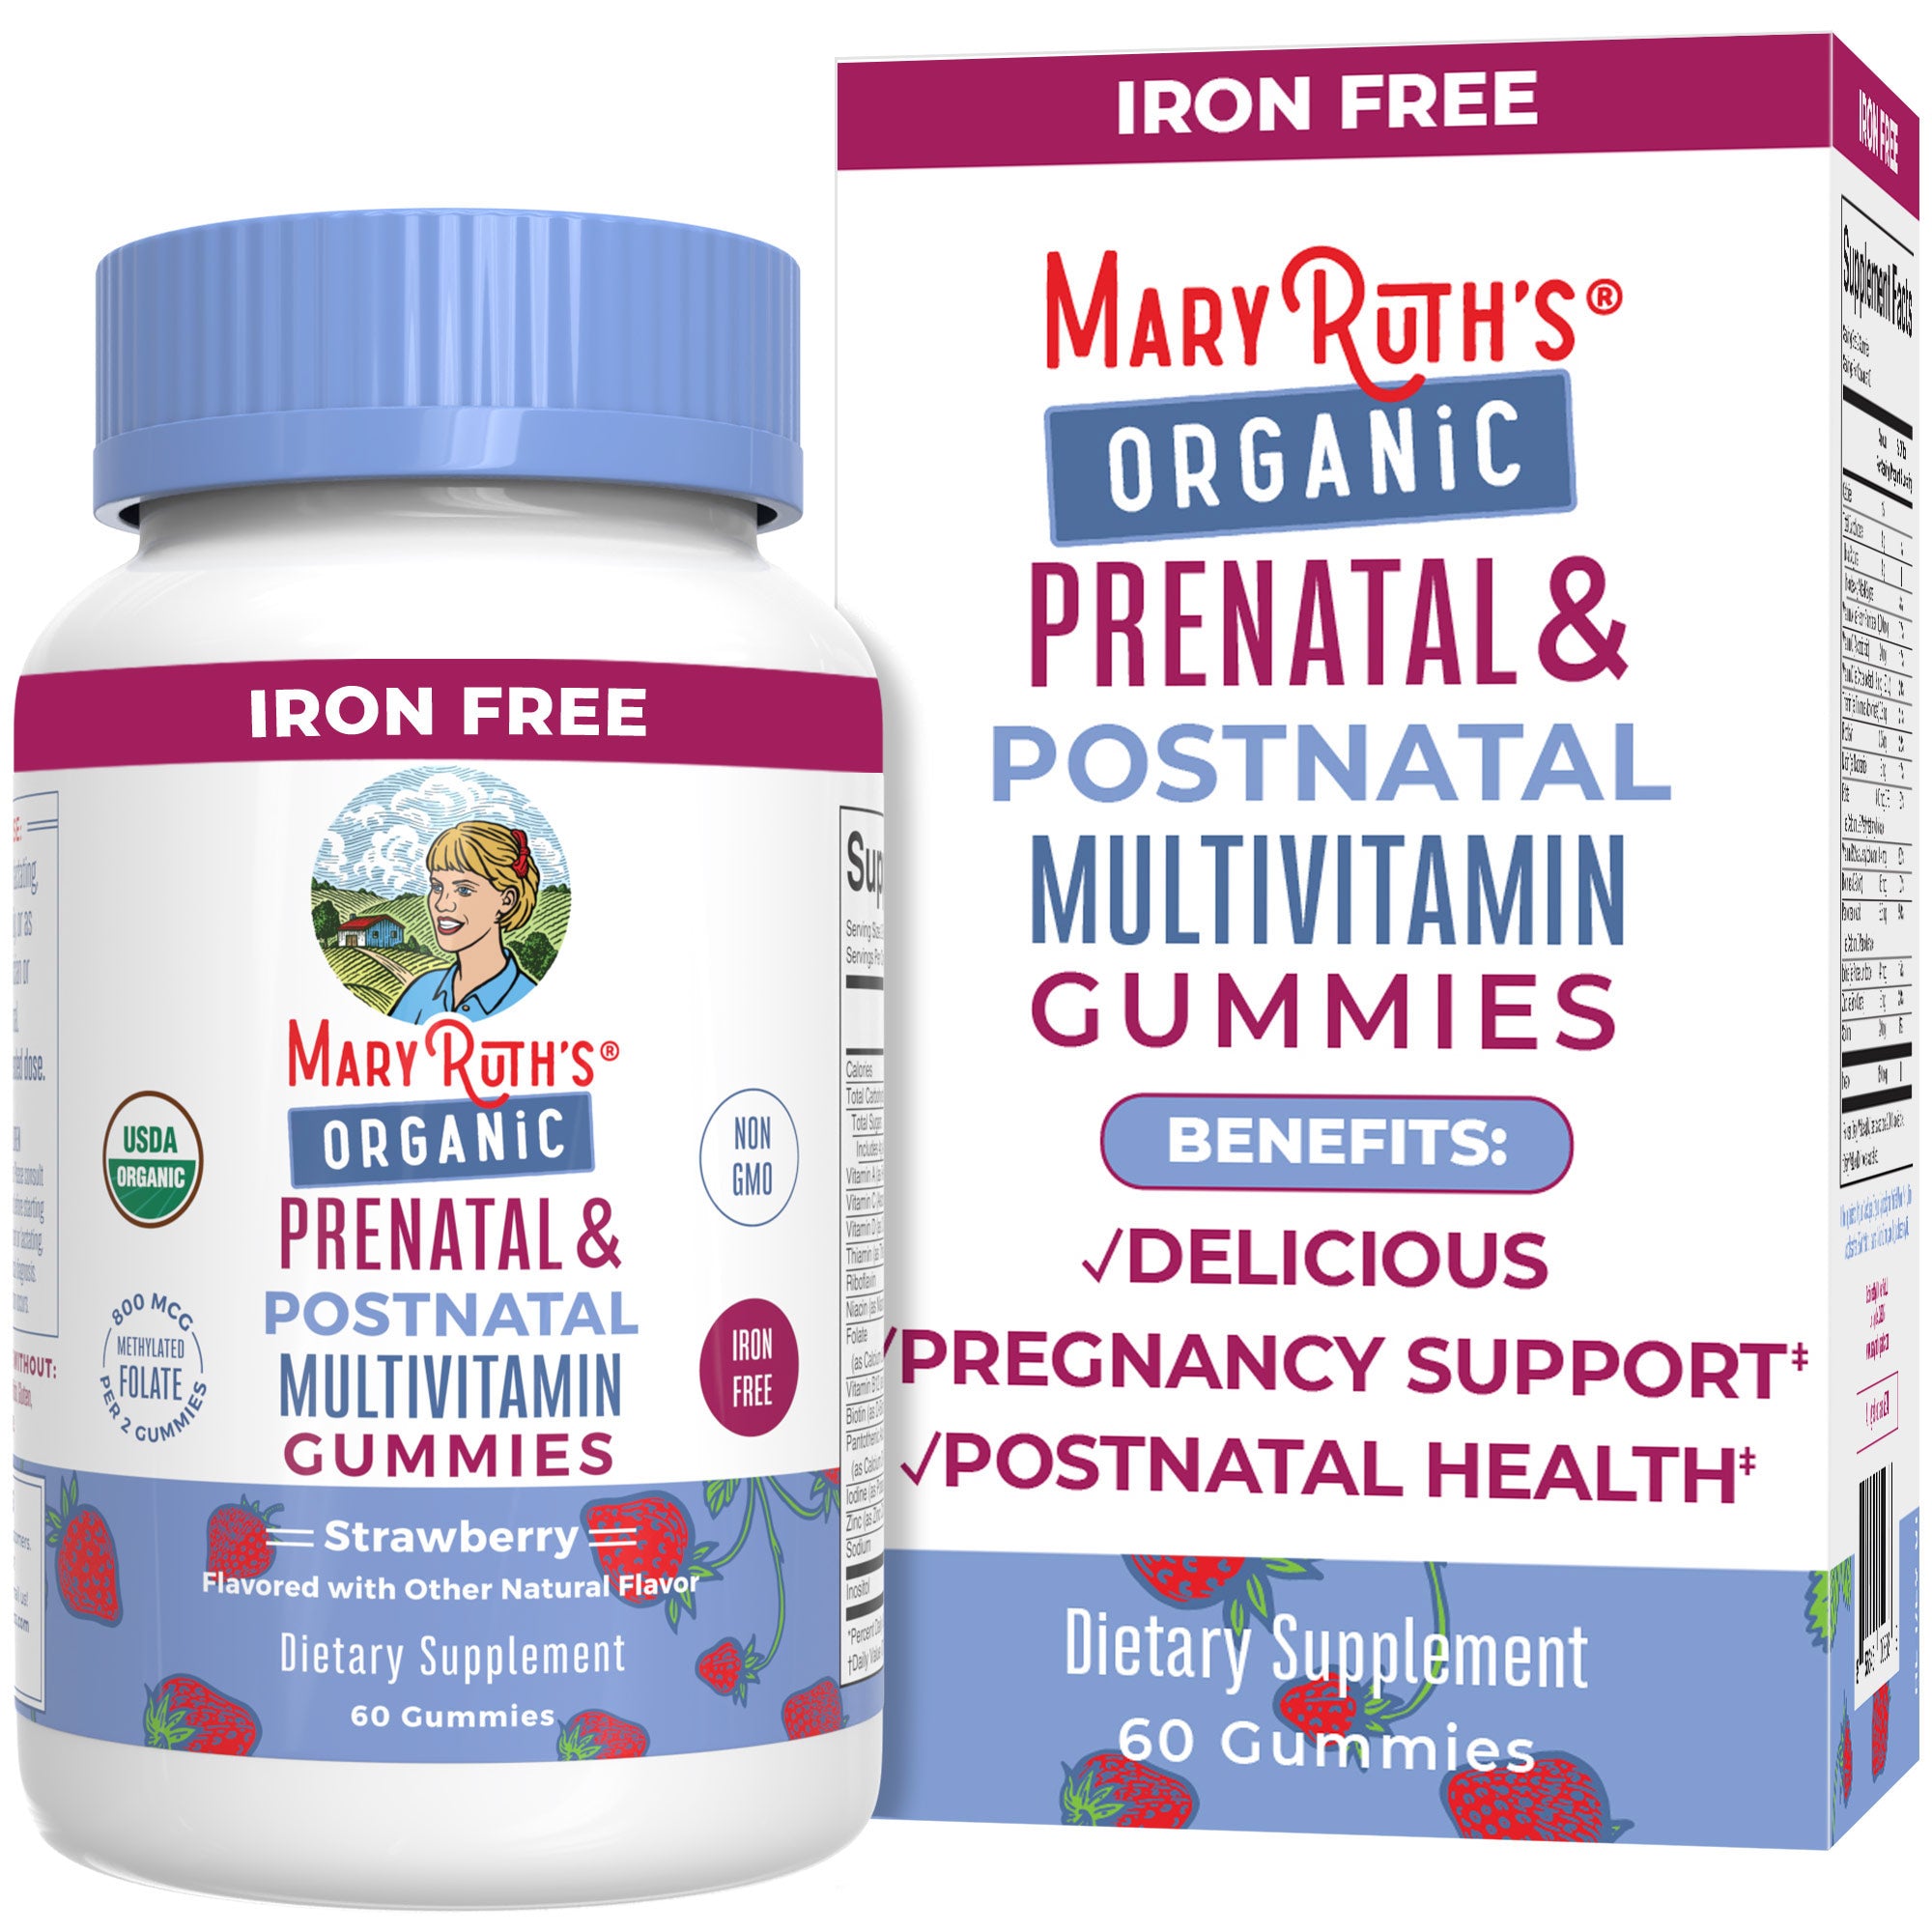 Organic Prenatal & Postnatal Multivitamin Gummies